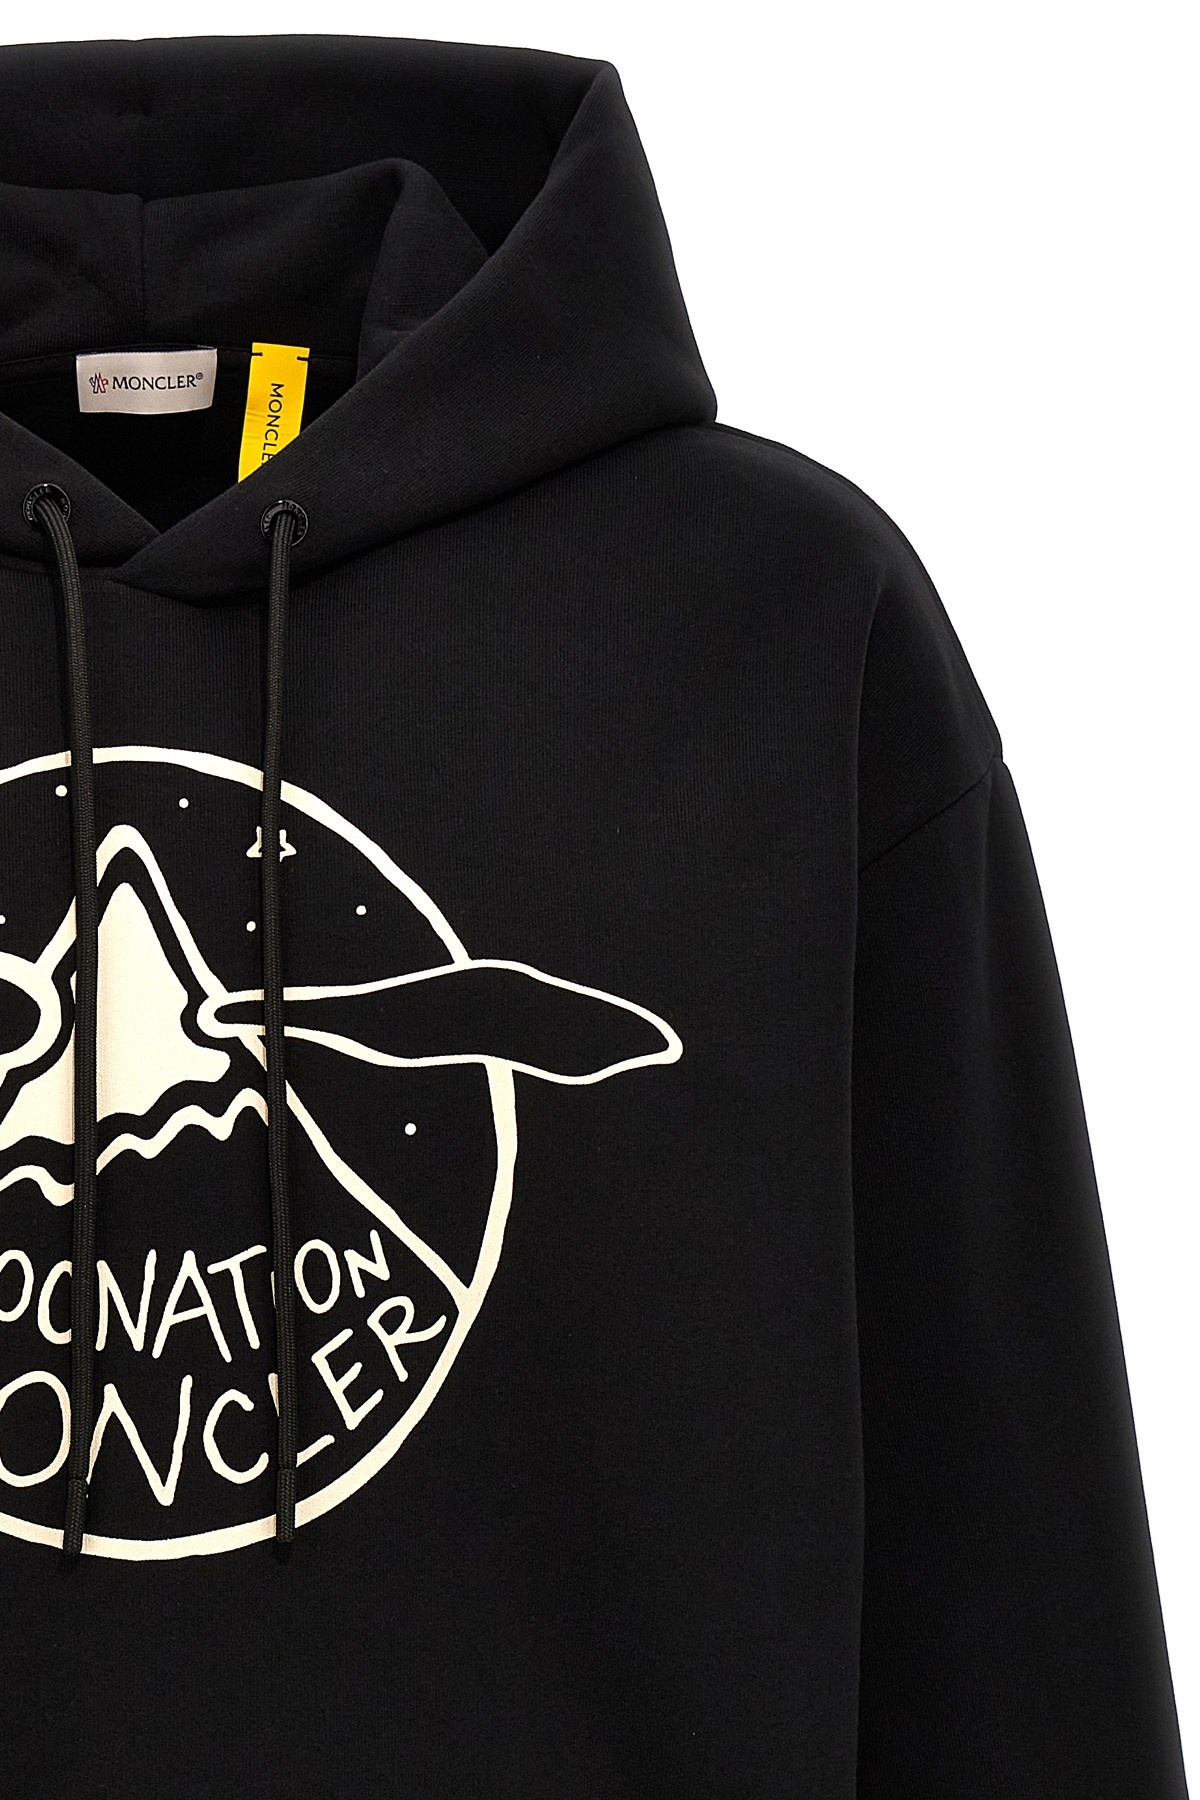 Moncler Genius Roc Nation by Jay-Z sweatshirt - 3